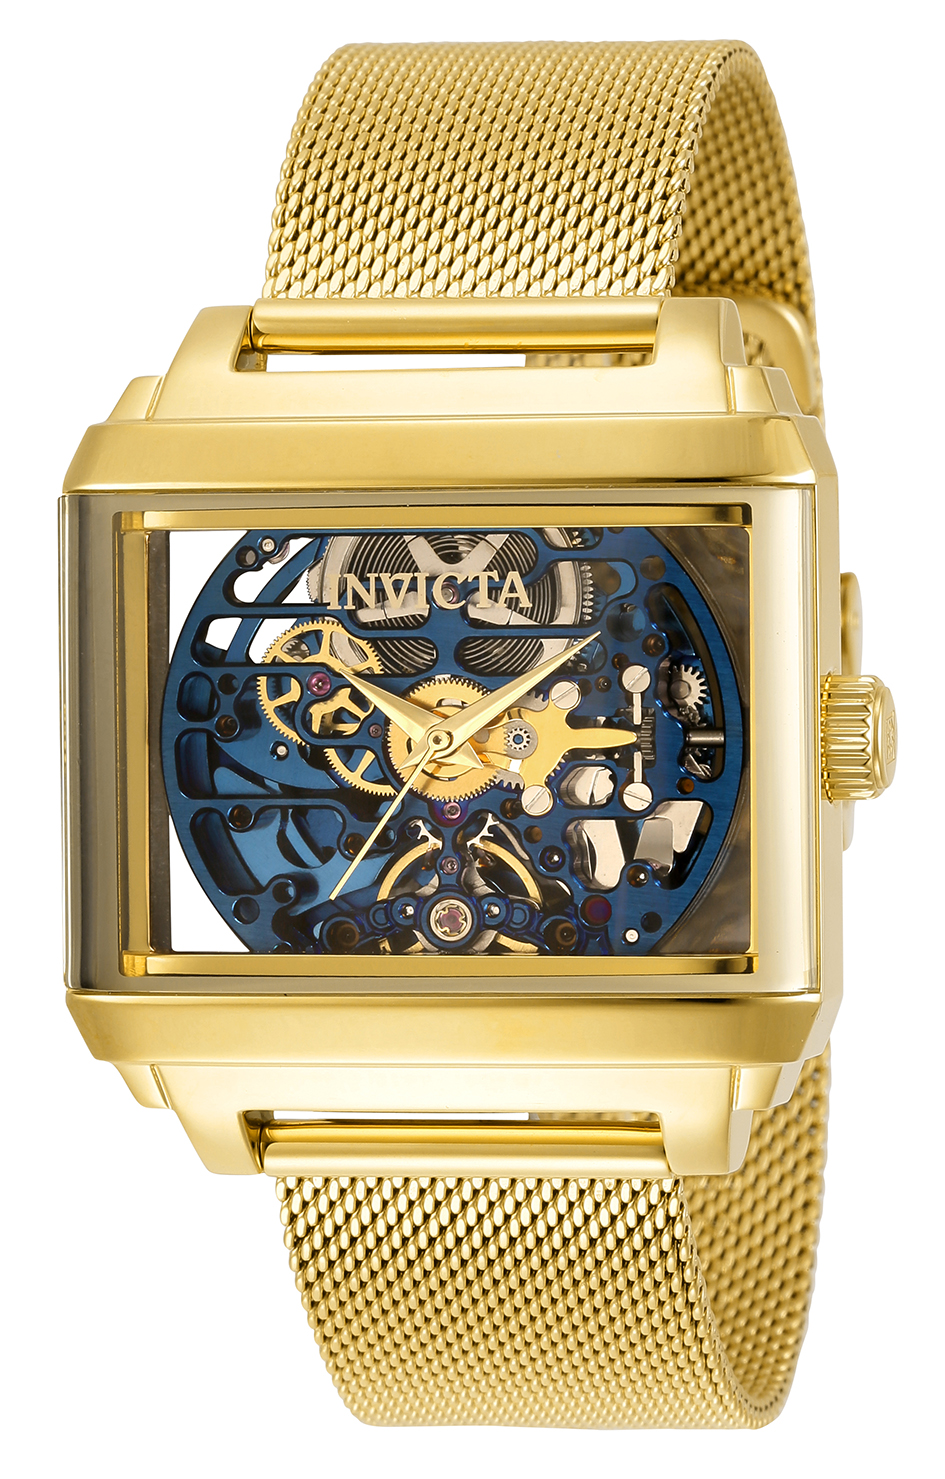 Invicta Objet D Art Automatic Men's Watch - 40mm, Gold (34380)